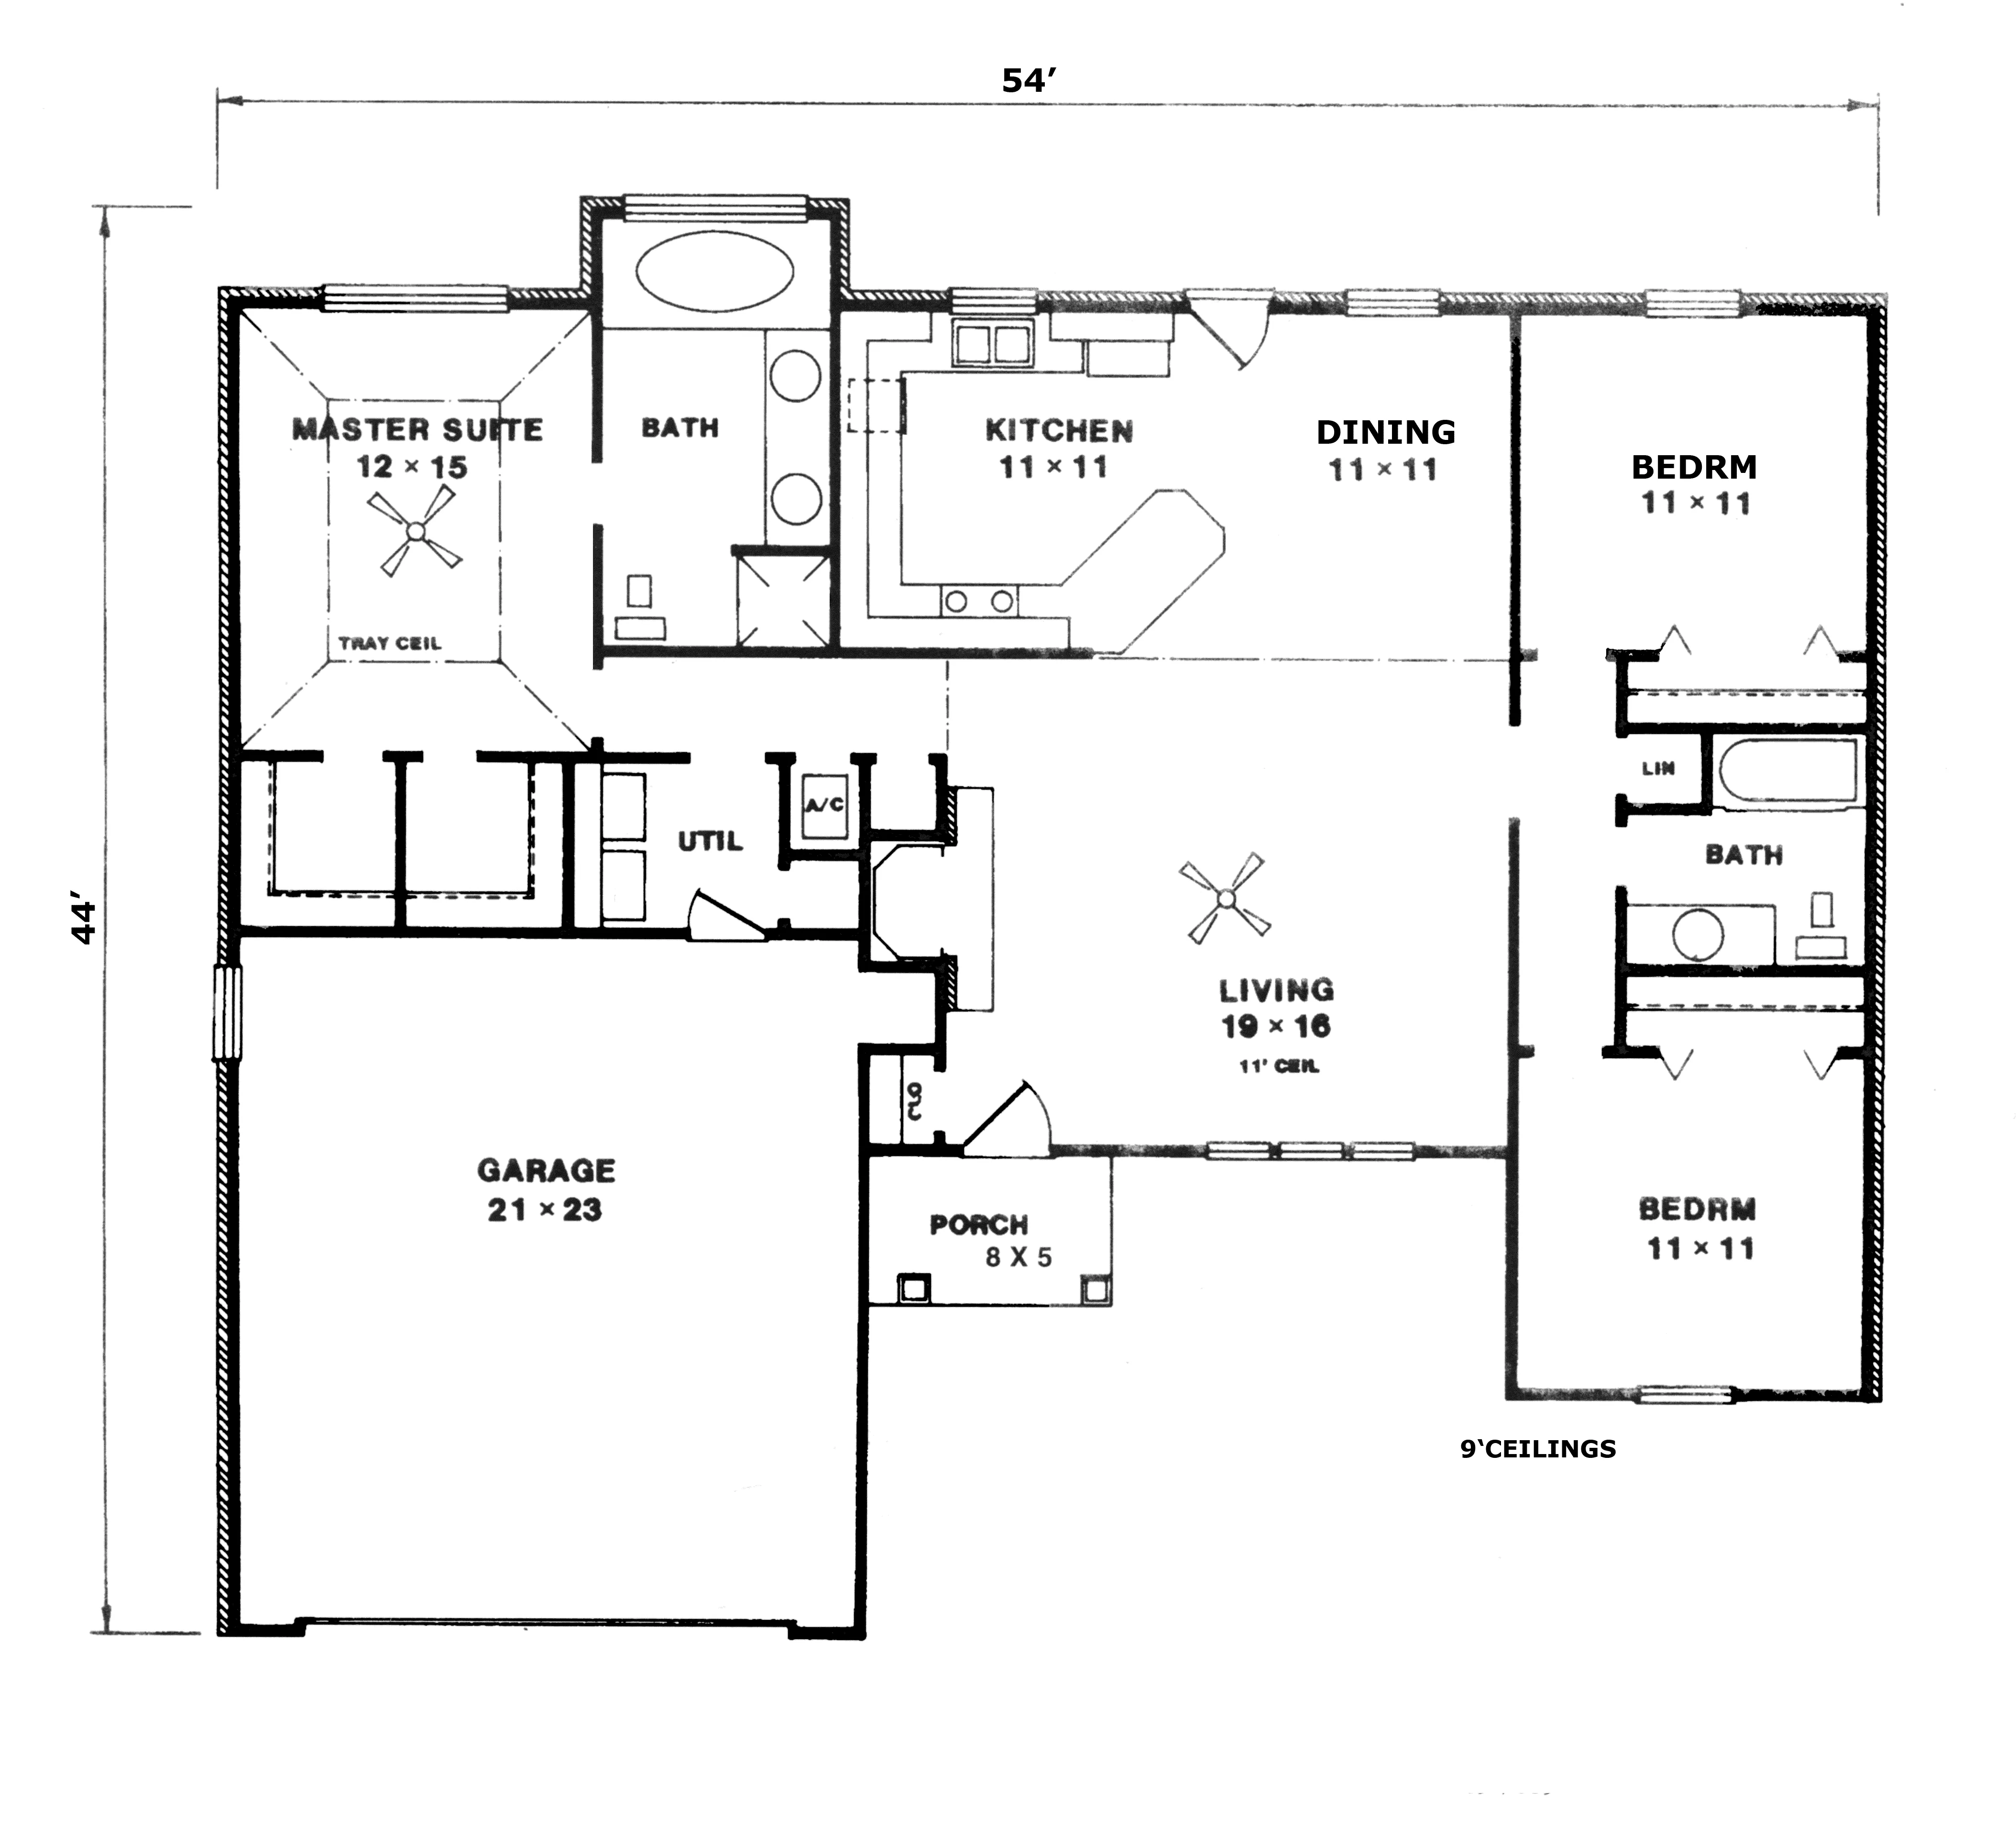 Traditional House Plan First Floor - Moonlight Beach Sunbelt Home 069D-0041 - Shop House Plans and More